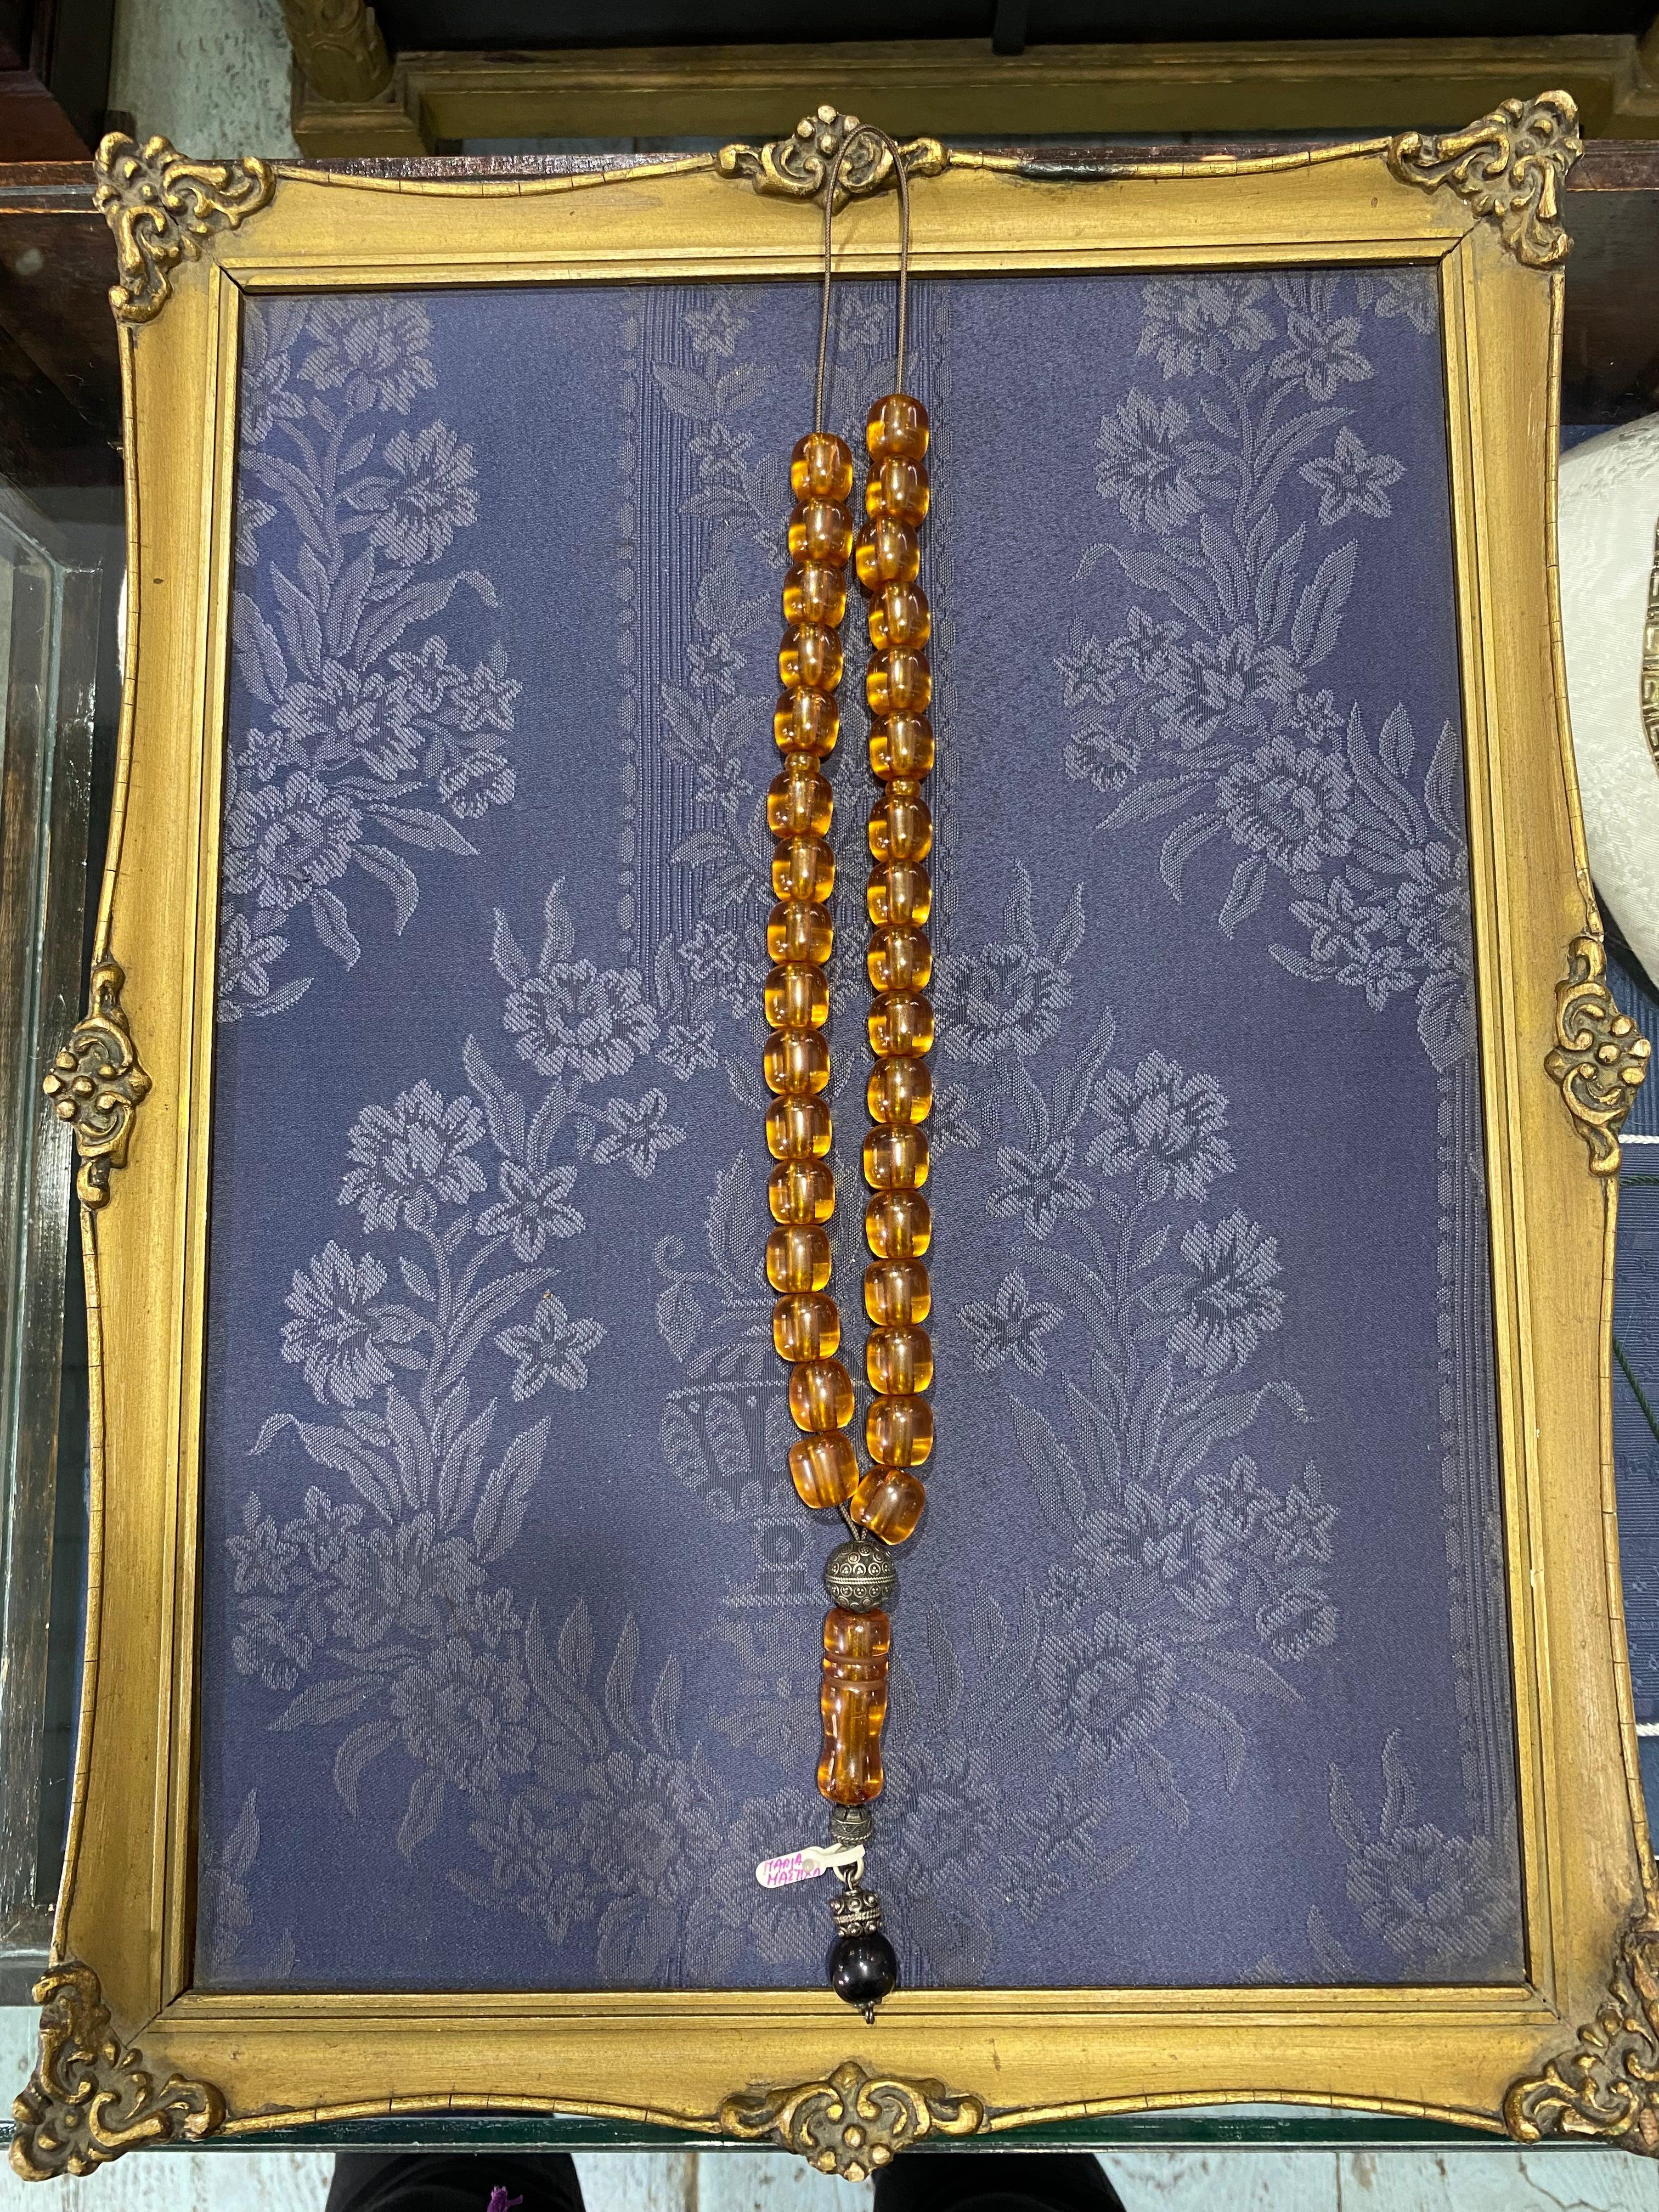 Authentic Mastic Amber Beads Komboloi